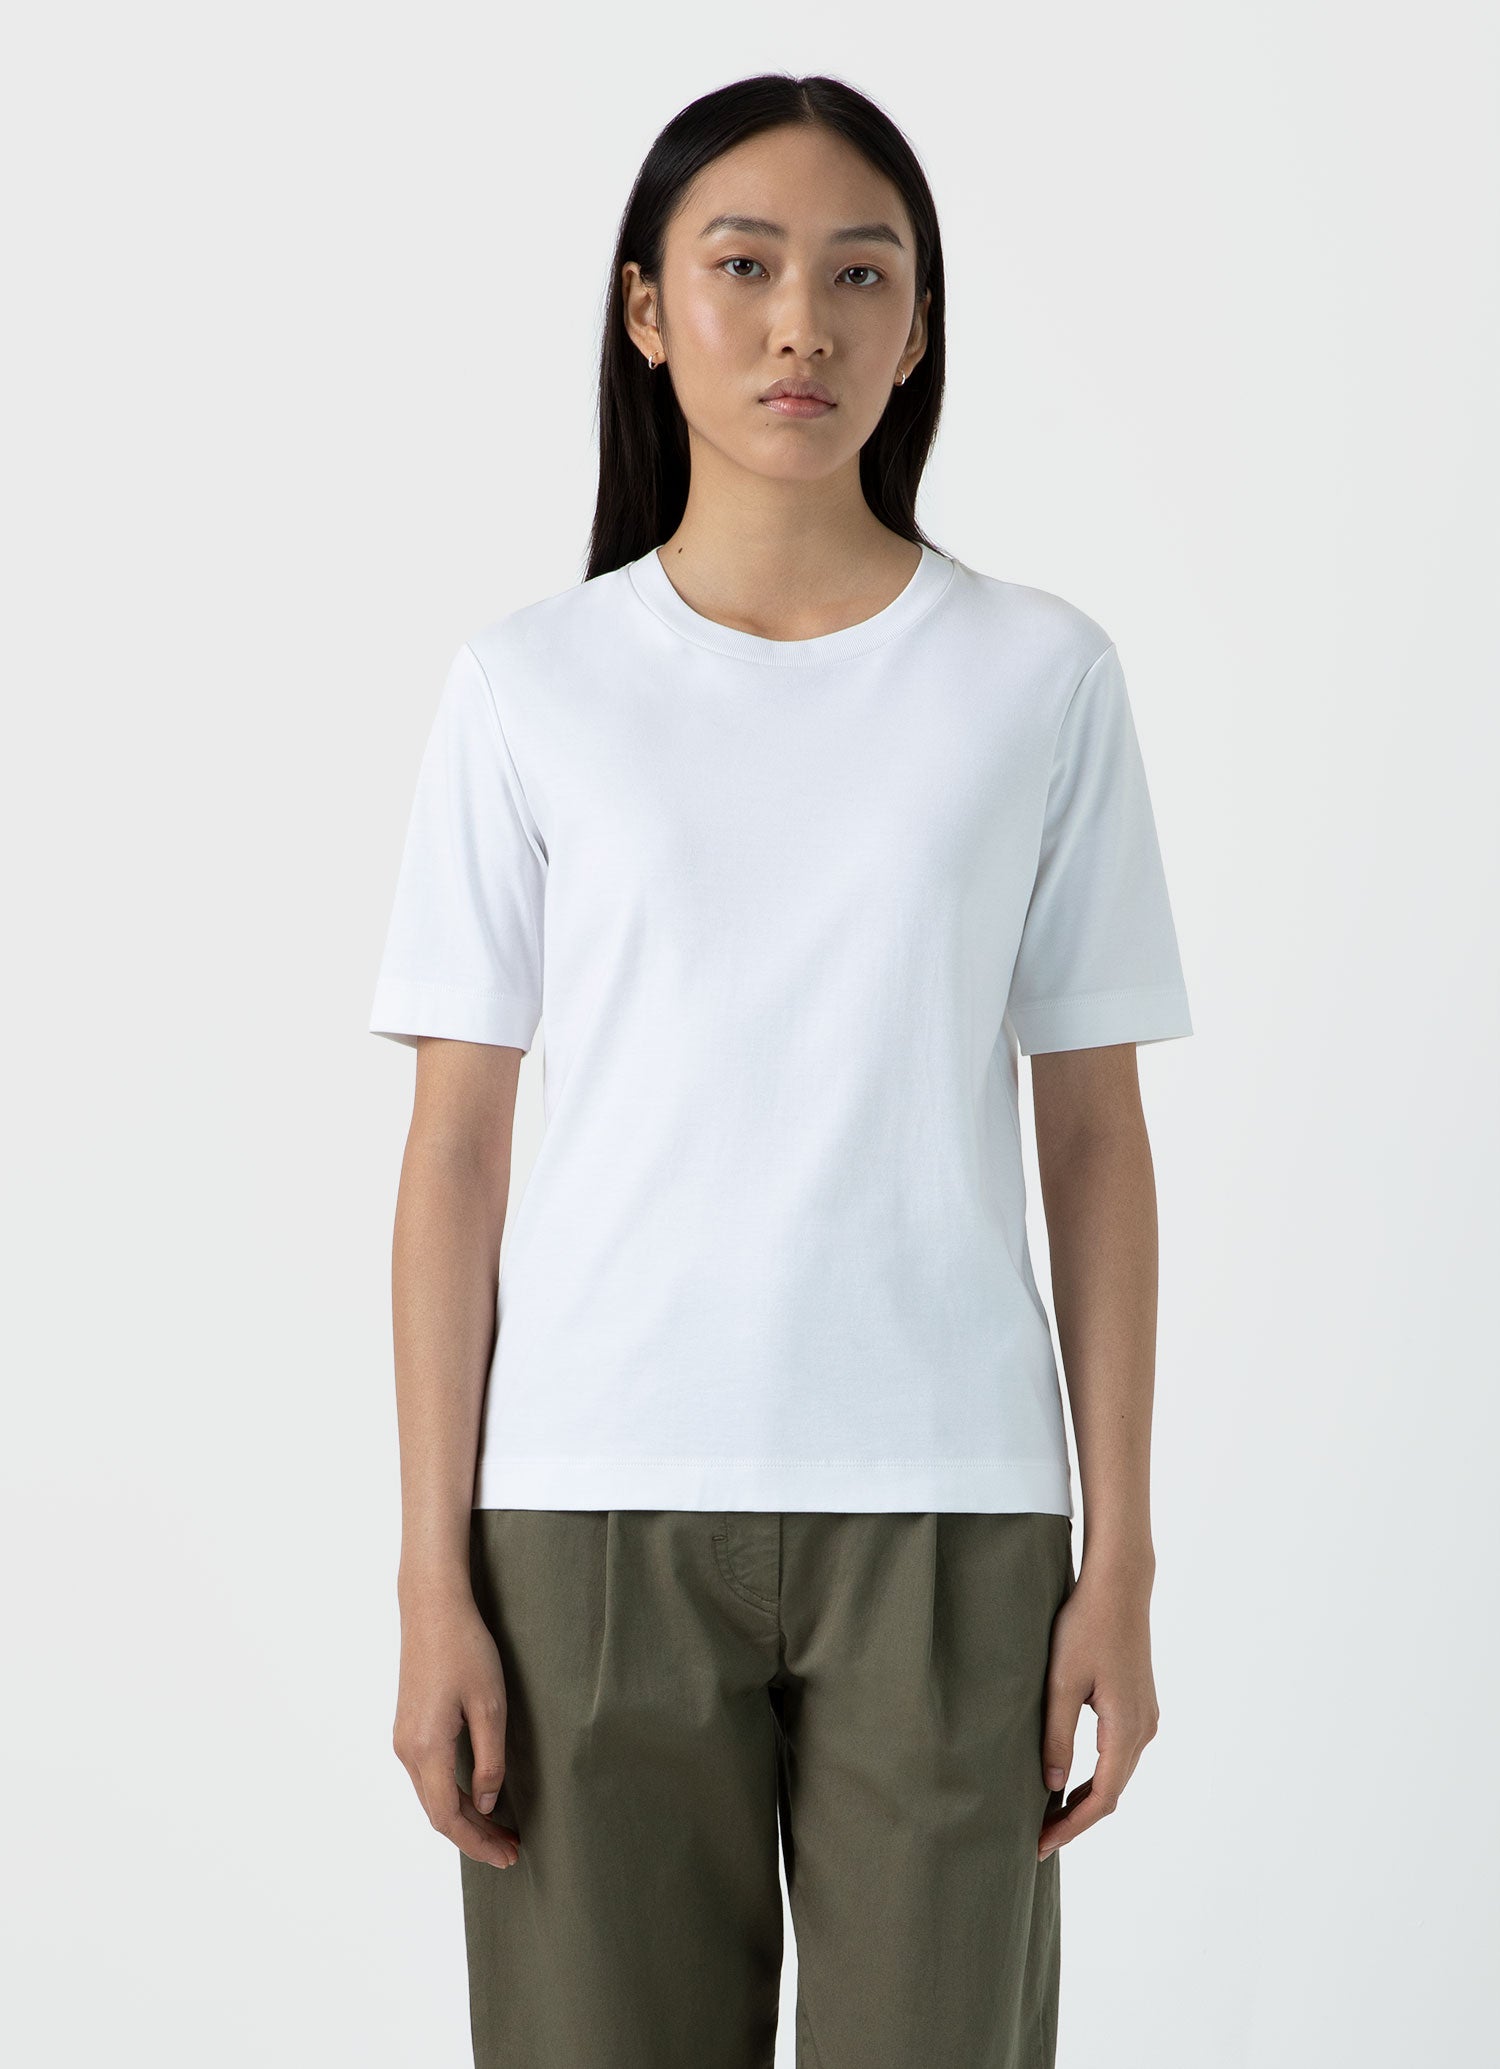 Women's 3/4 Sleeve Boat Neck T-shirt in White